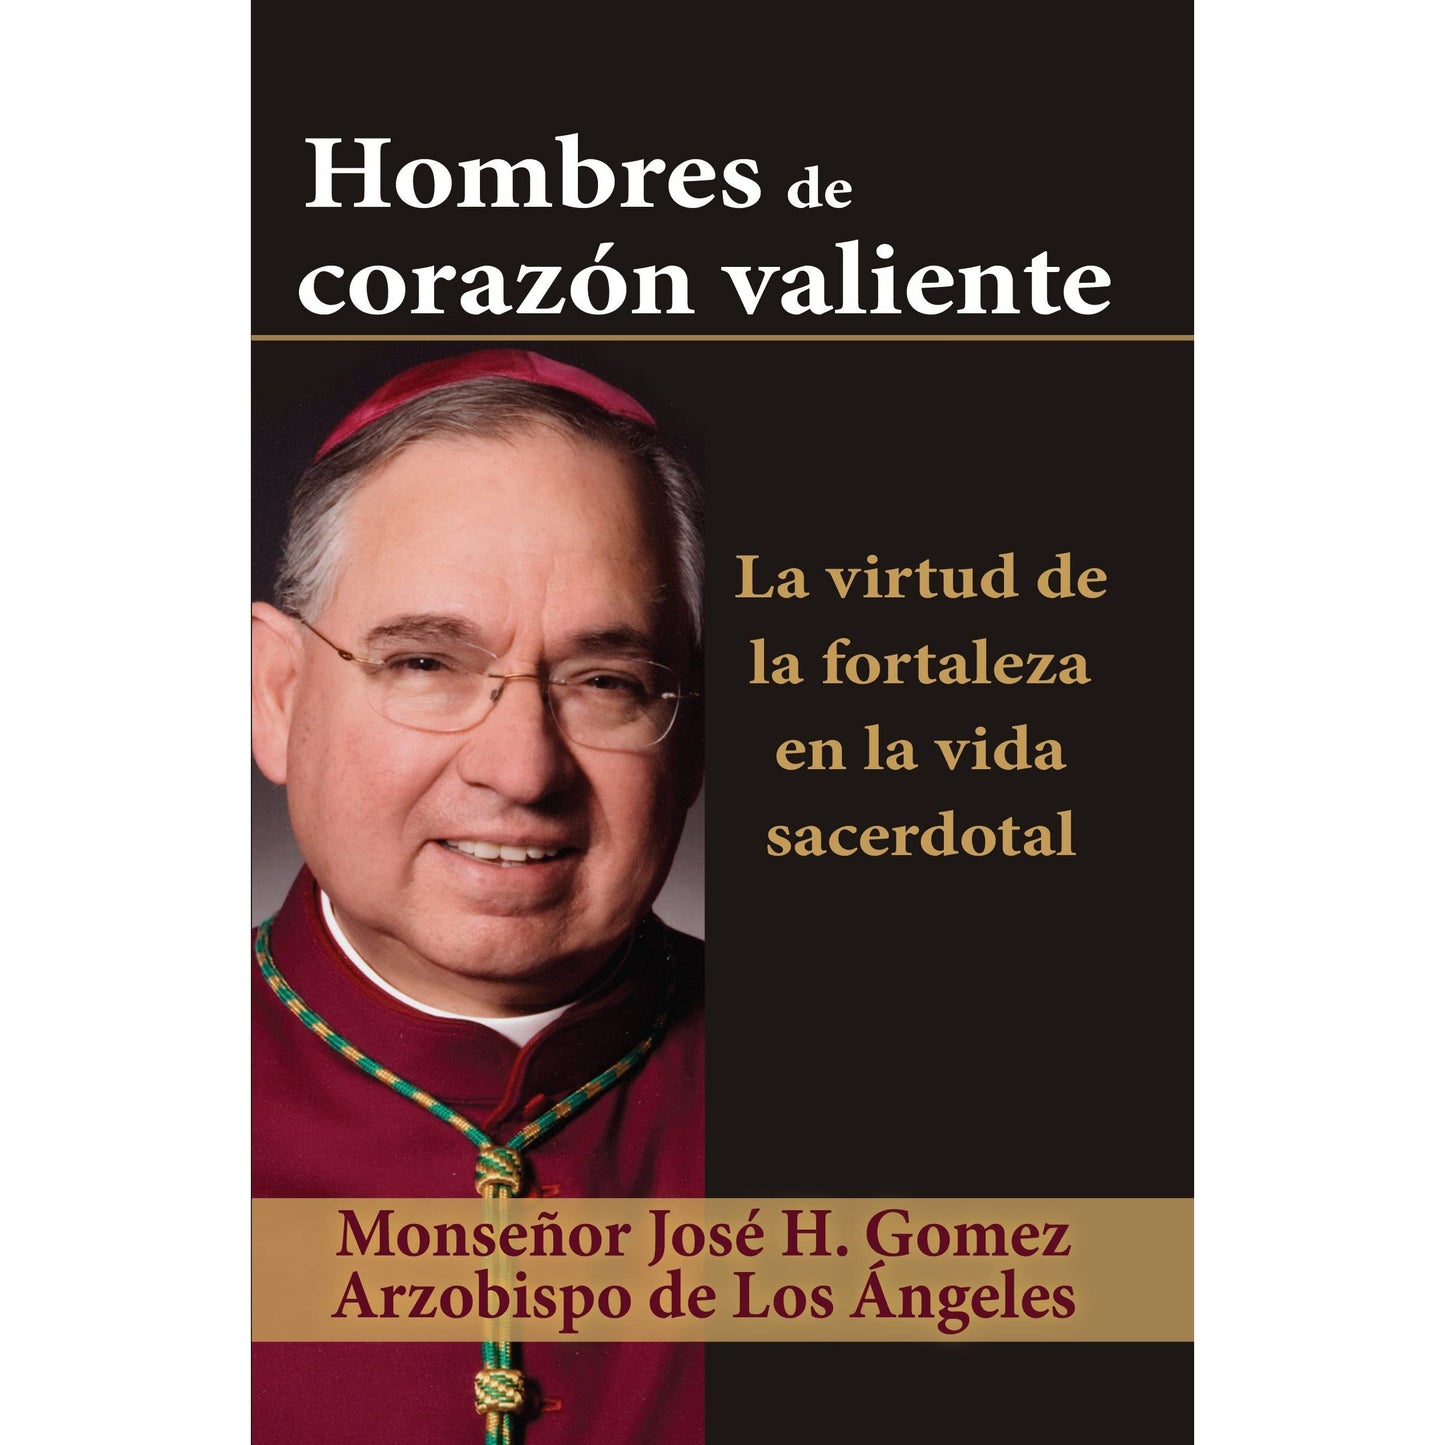 Libro: Hombres de Corazón valiente - Monseñor Jose H. Gomez